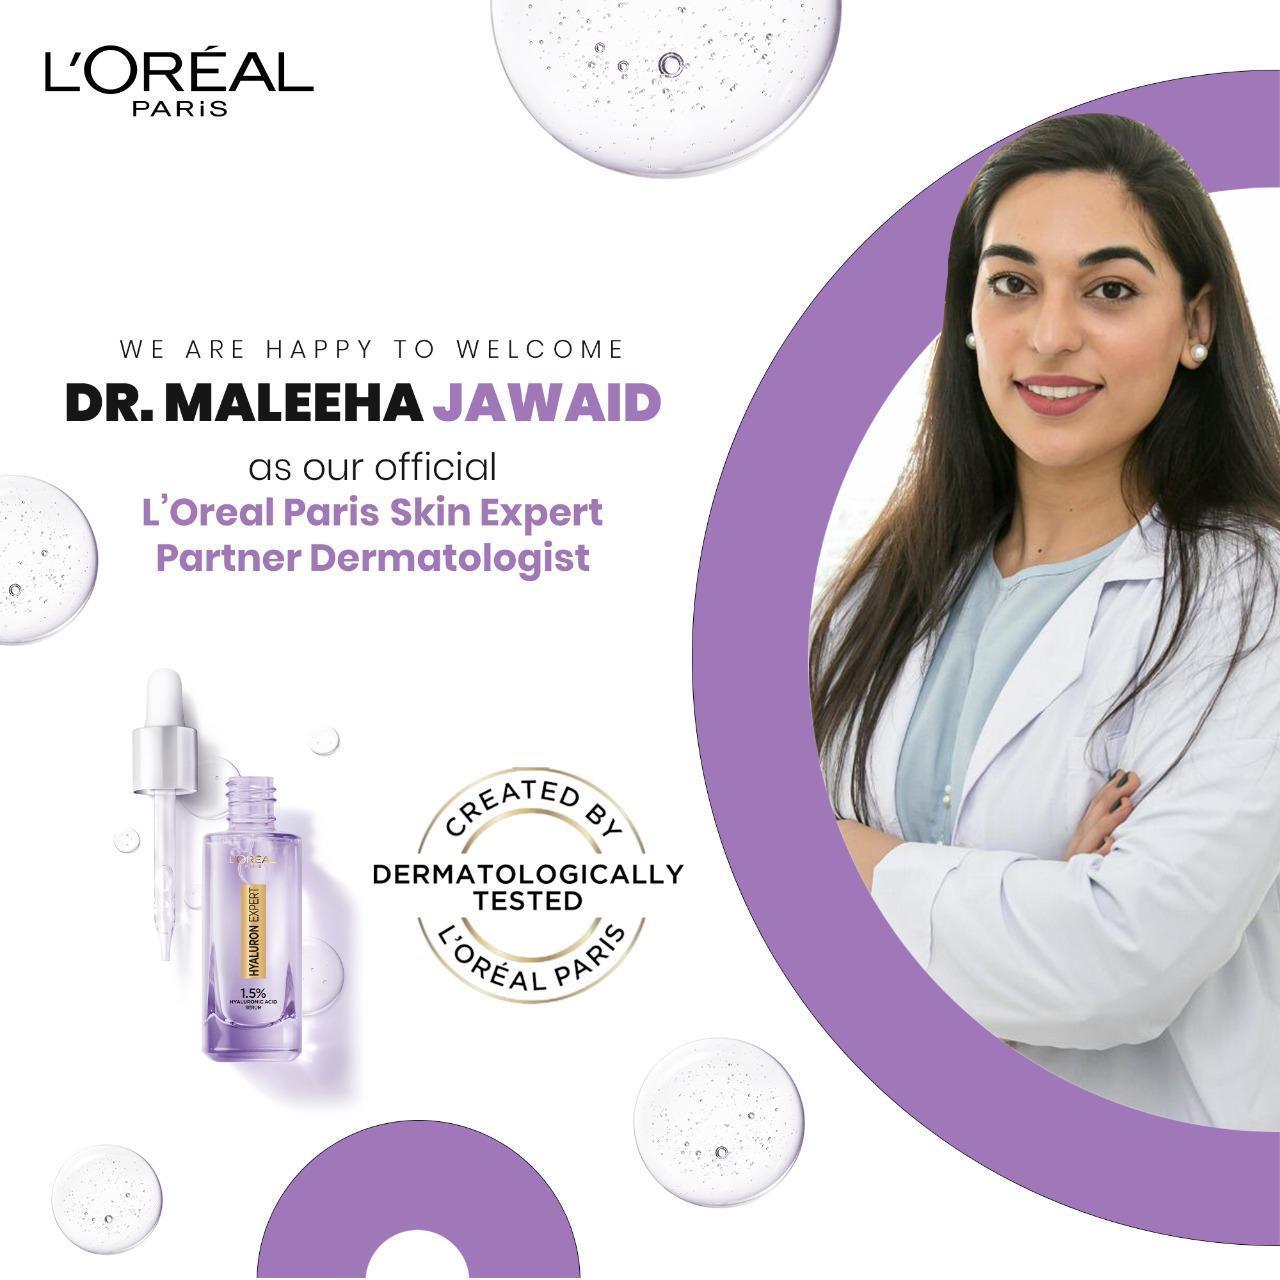 L'Oréal Paris Skin Expert Announces Dr. Maleeha Jawaid as their Official Partner Dermatologist